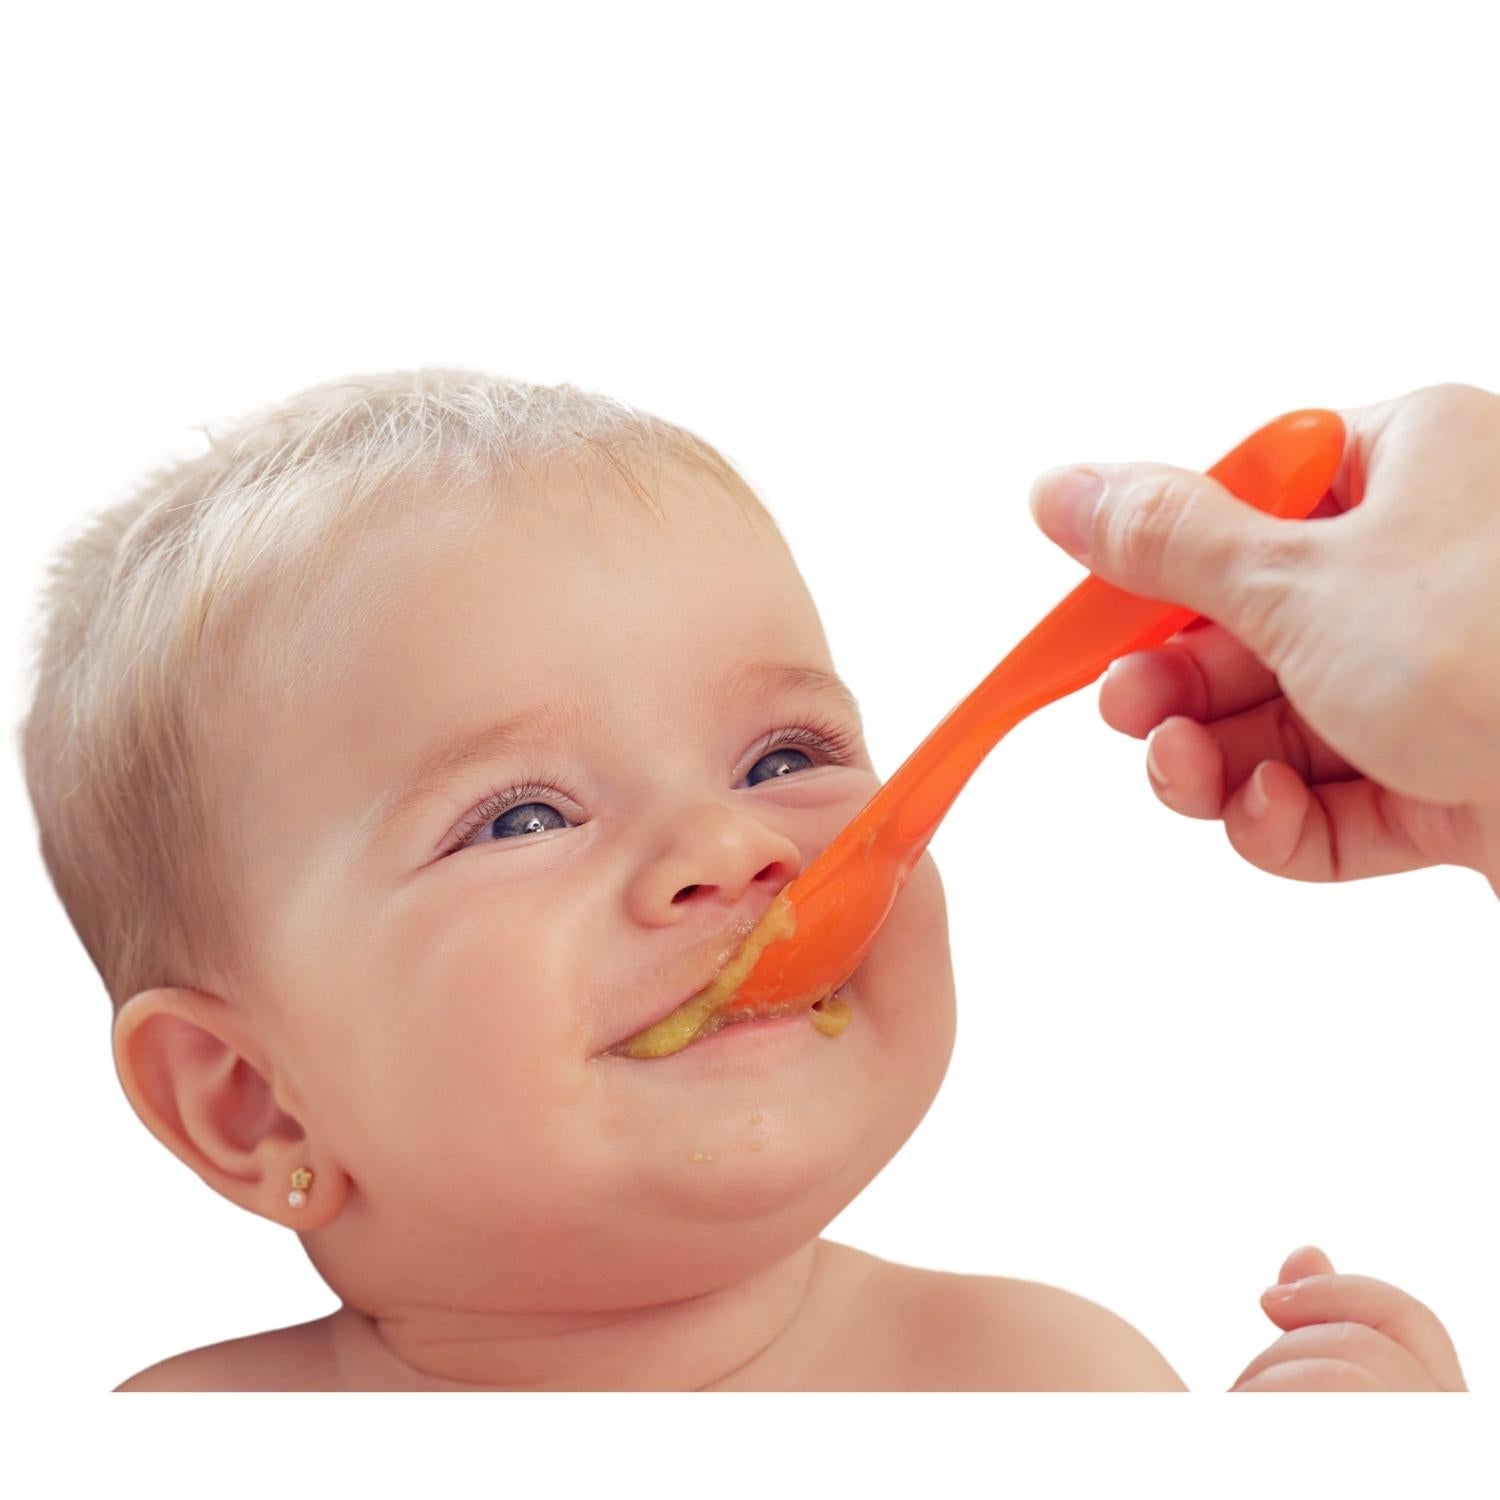 baby eating puree